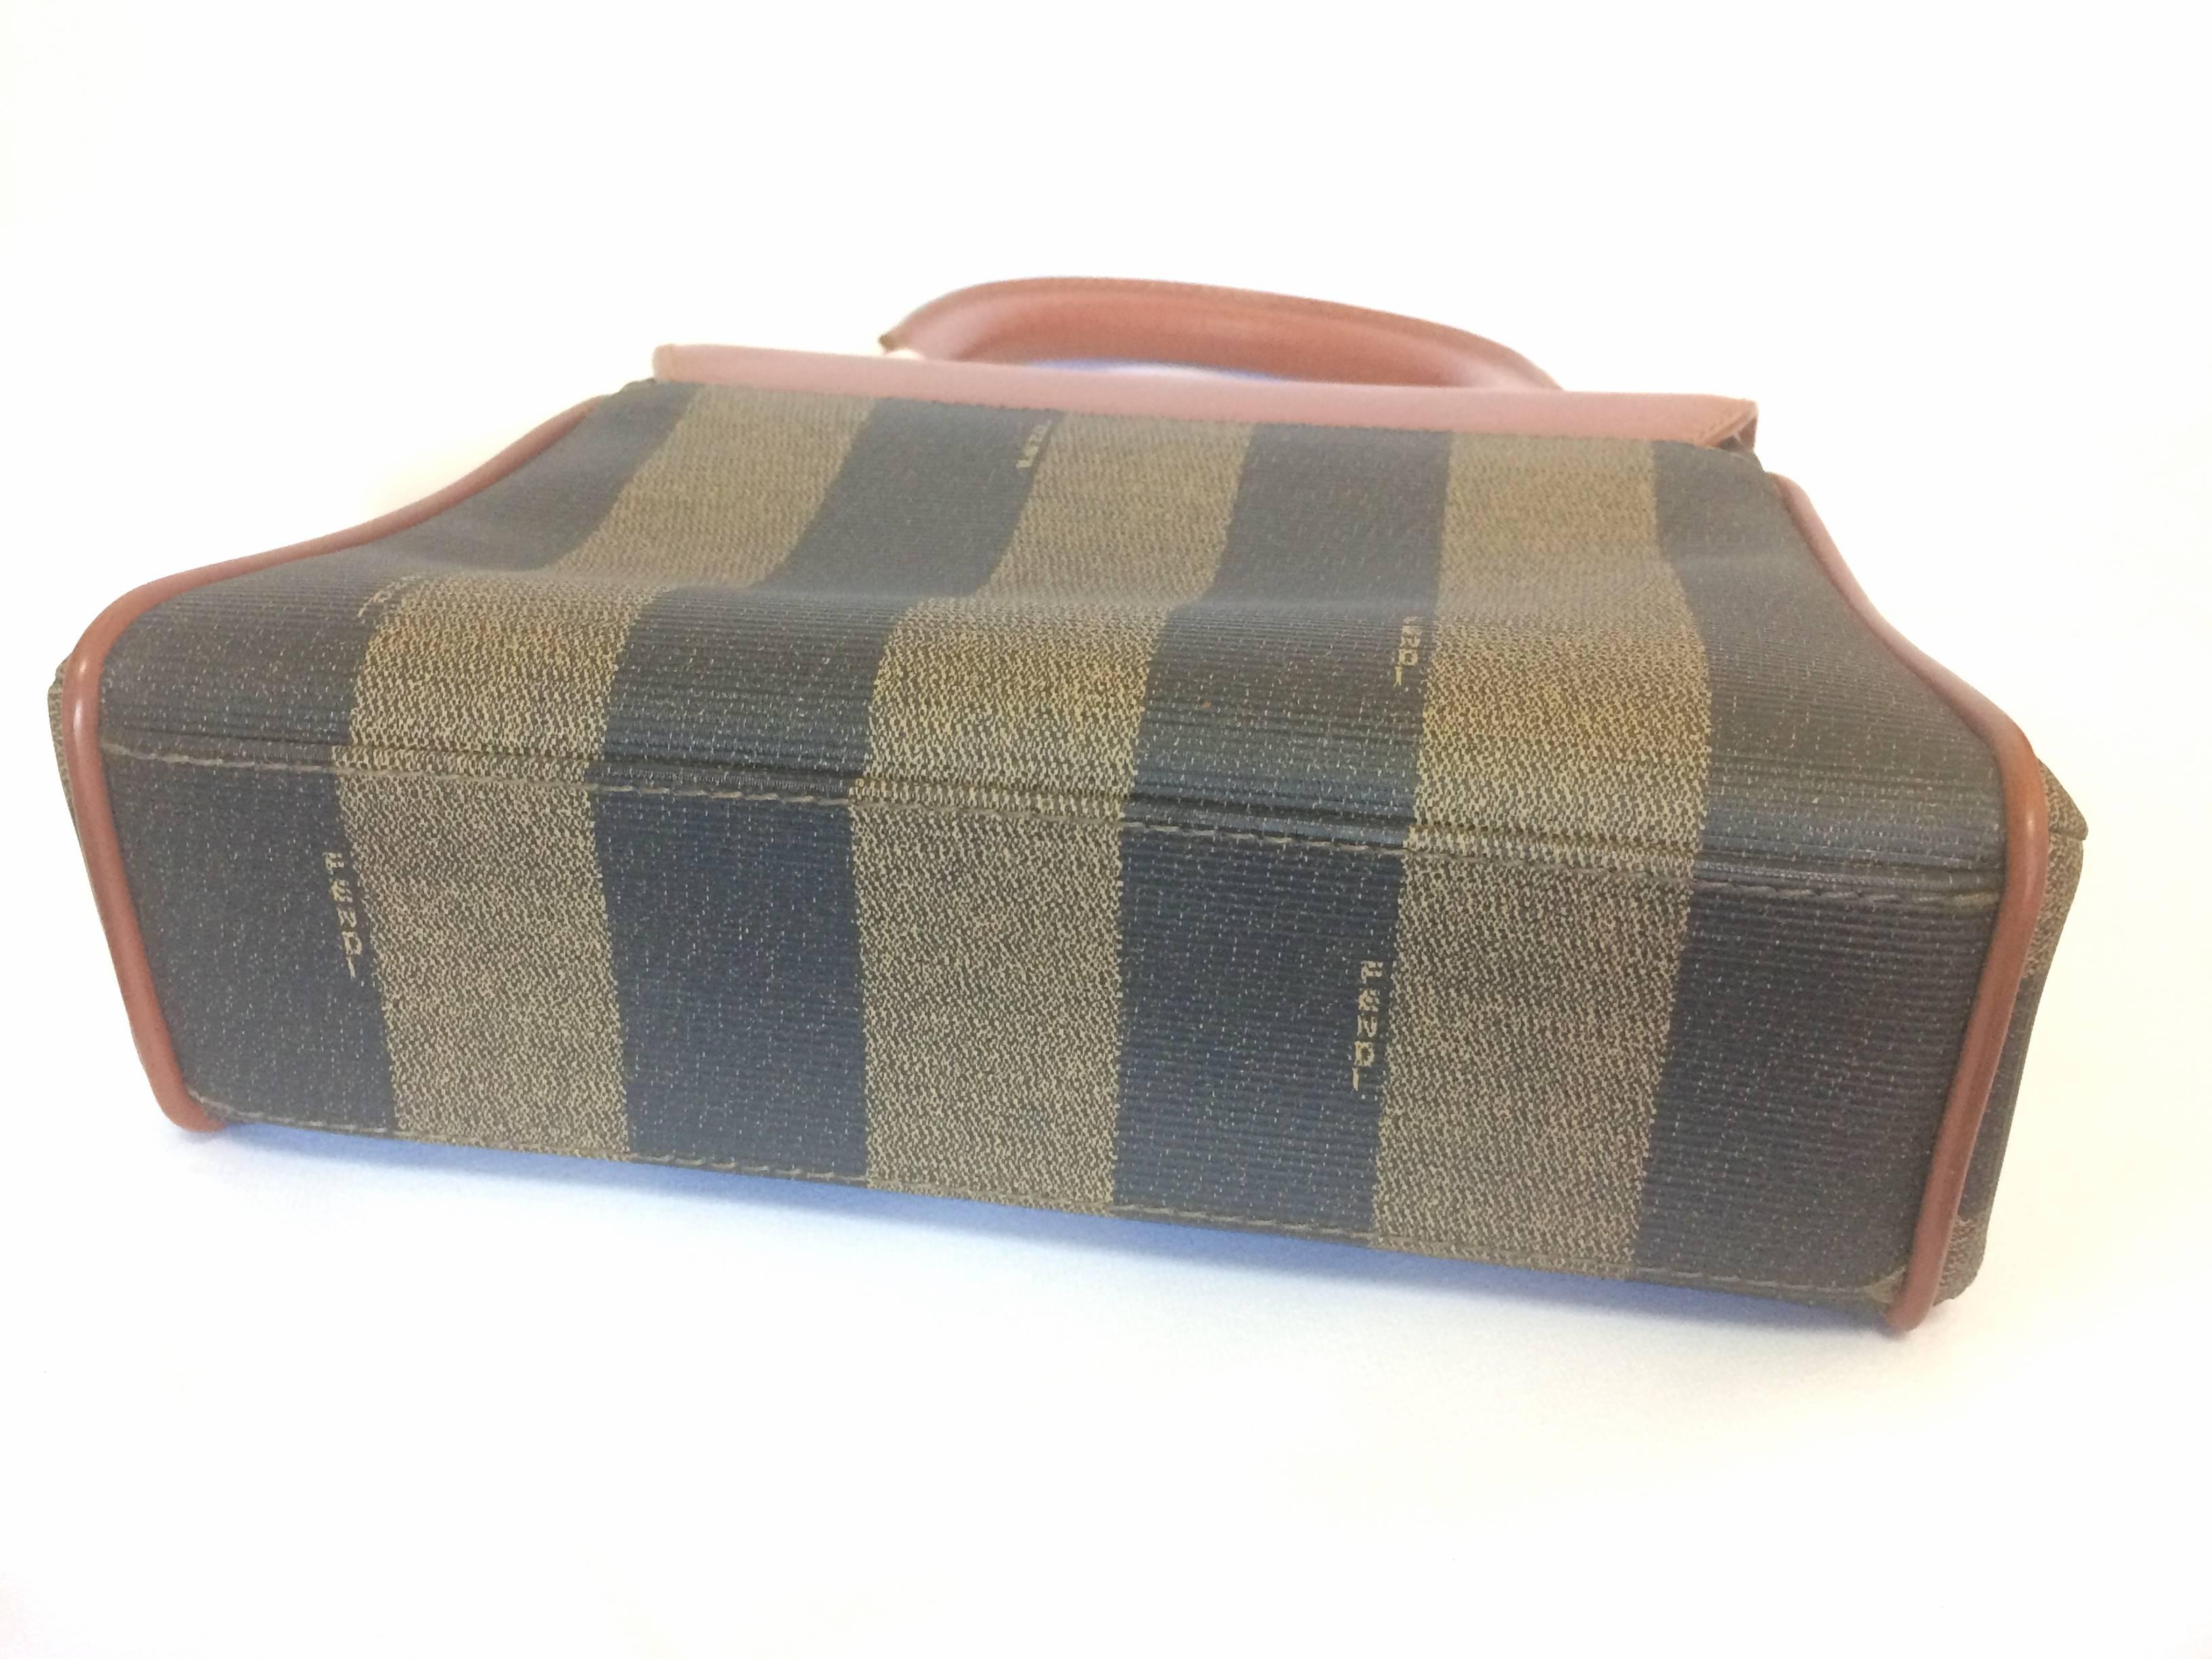 Women's or Men's Vintage FENDI kelly bag style mini handbag in pecan stripes and brown leather